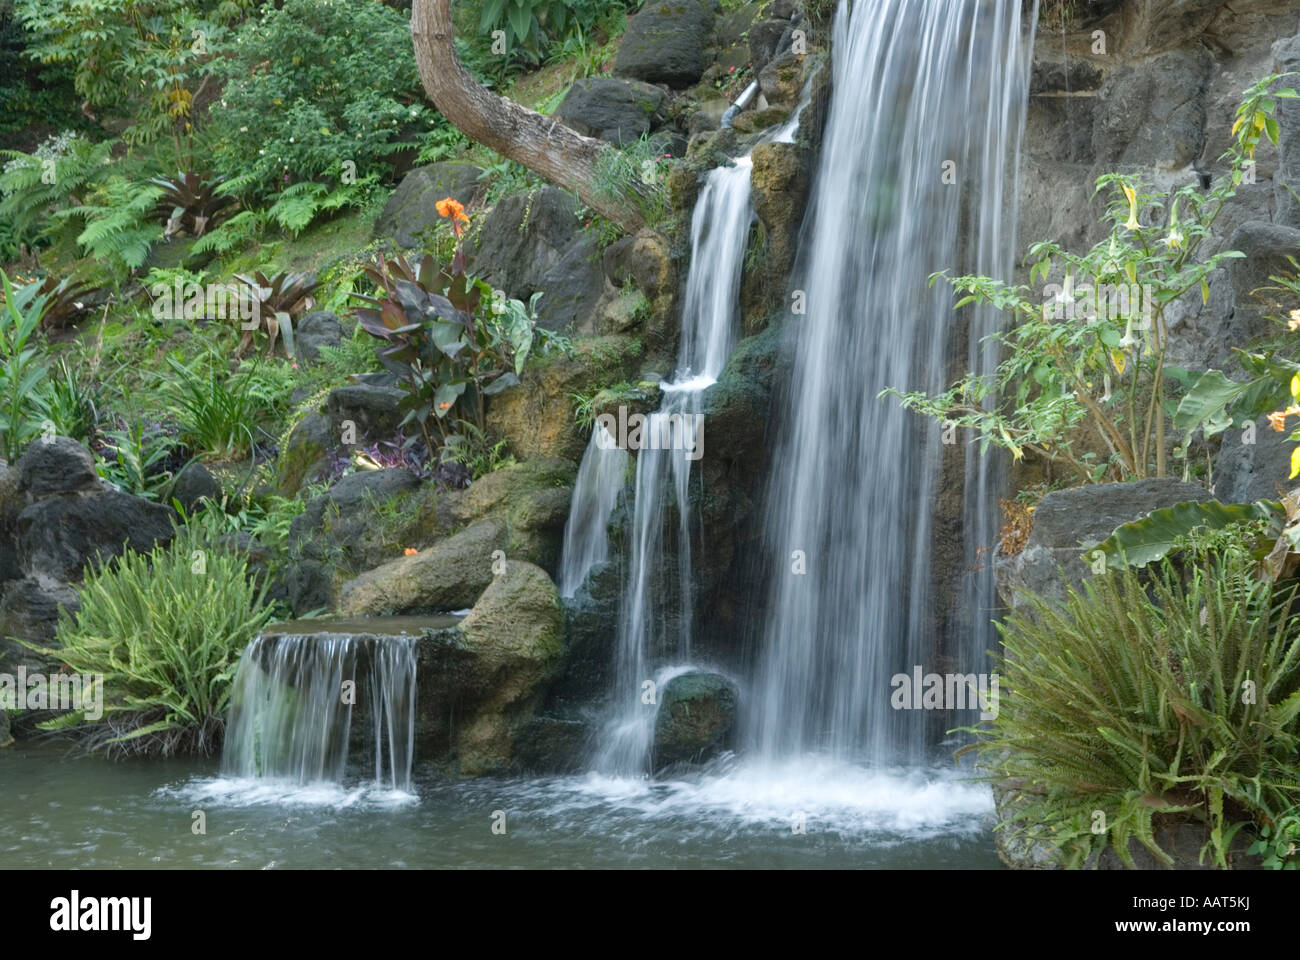 Artificial waterfall Los Angeles Arboretum Arcadia California Stock Photo